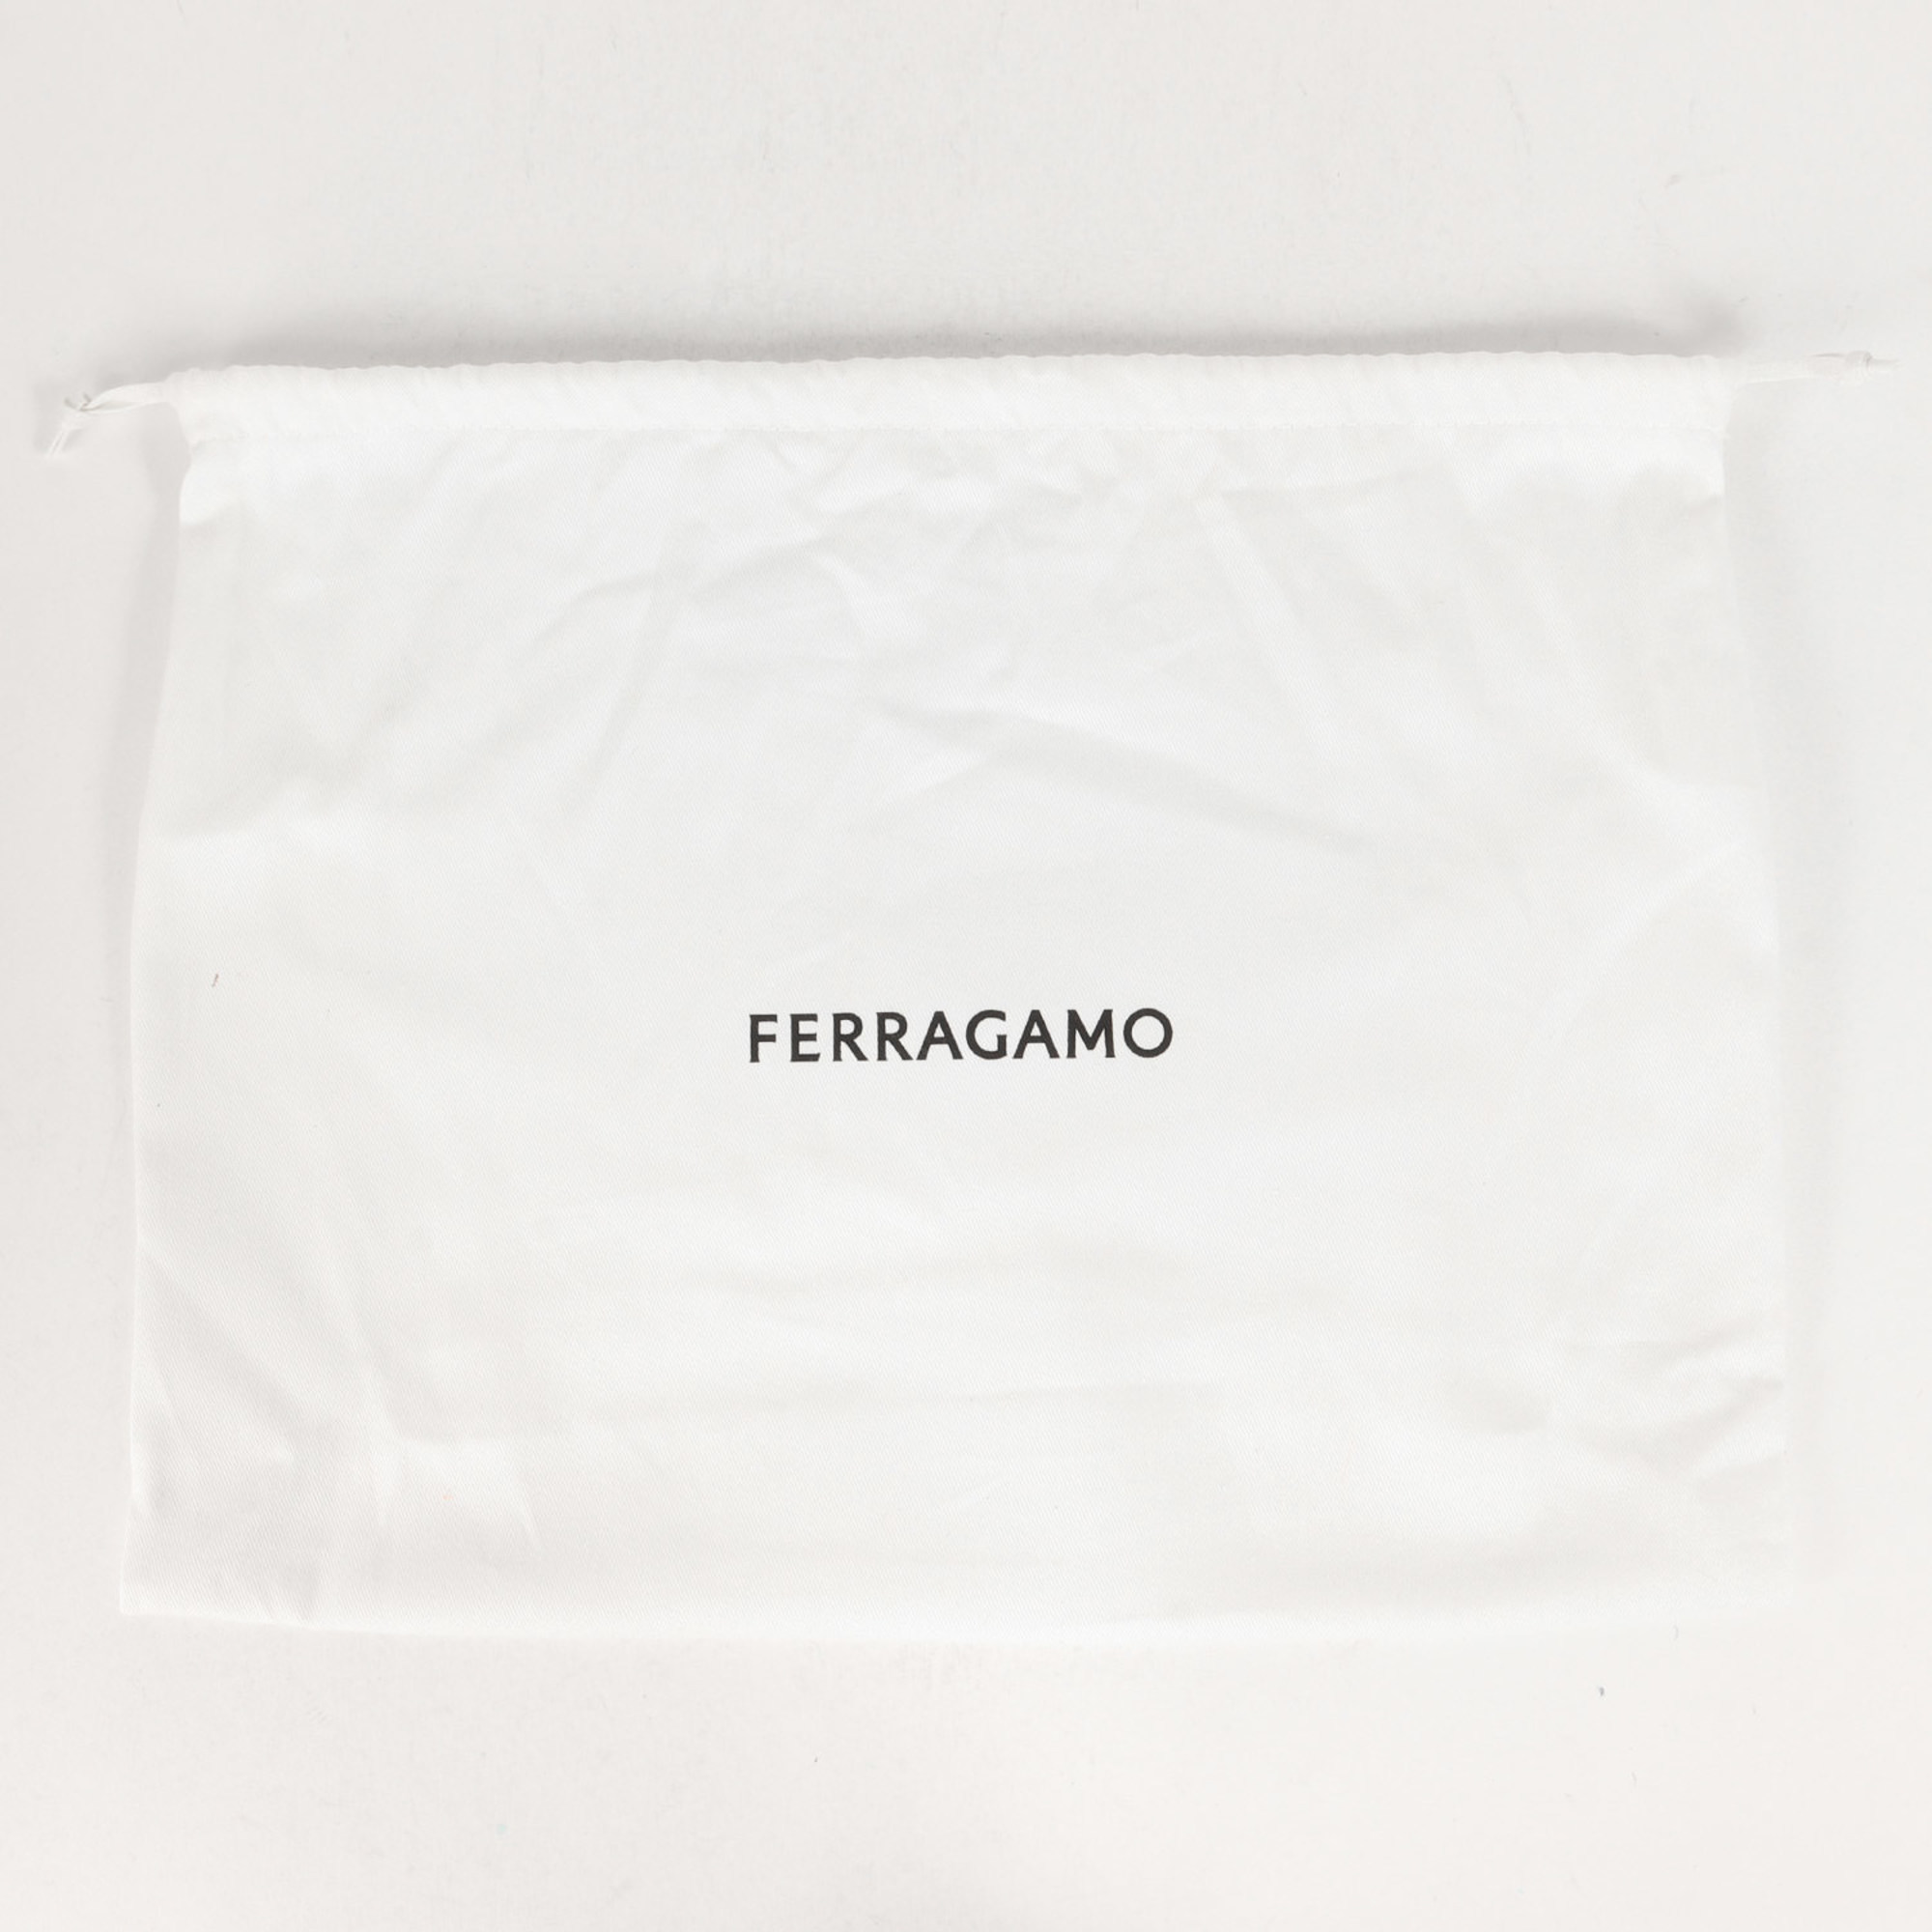 Salvatore Ferragamo Bag Recent Model Embossed Wrist Strap Calf Leather Clutch Handbag Pouch Dark Purple Men's K4073